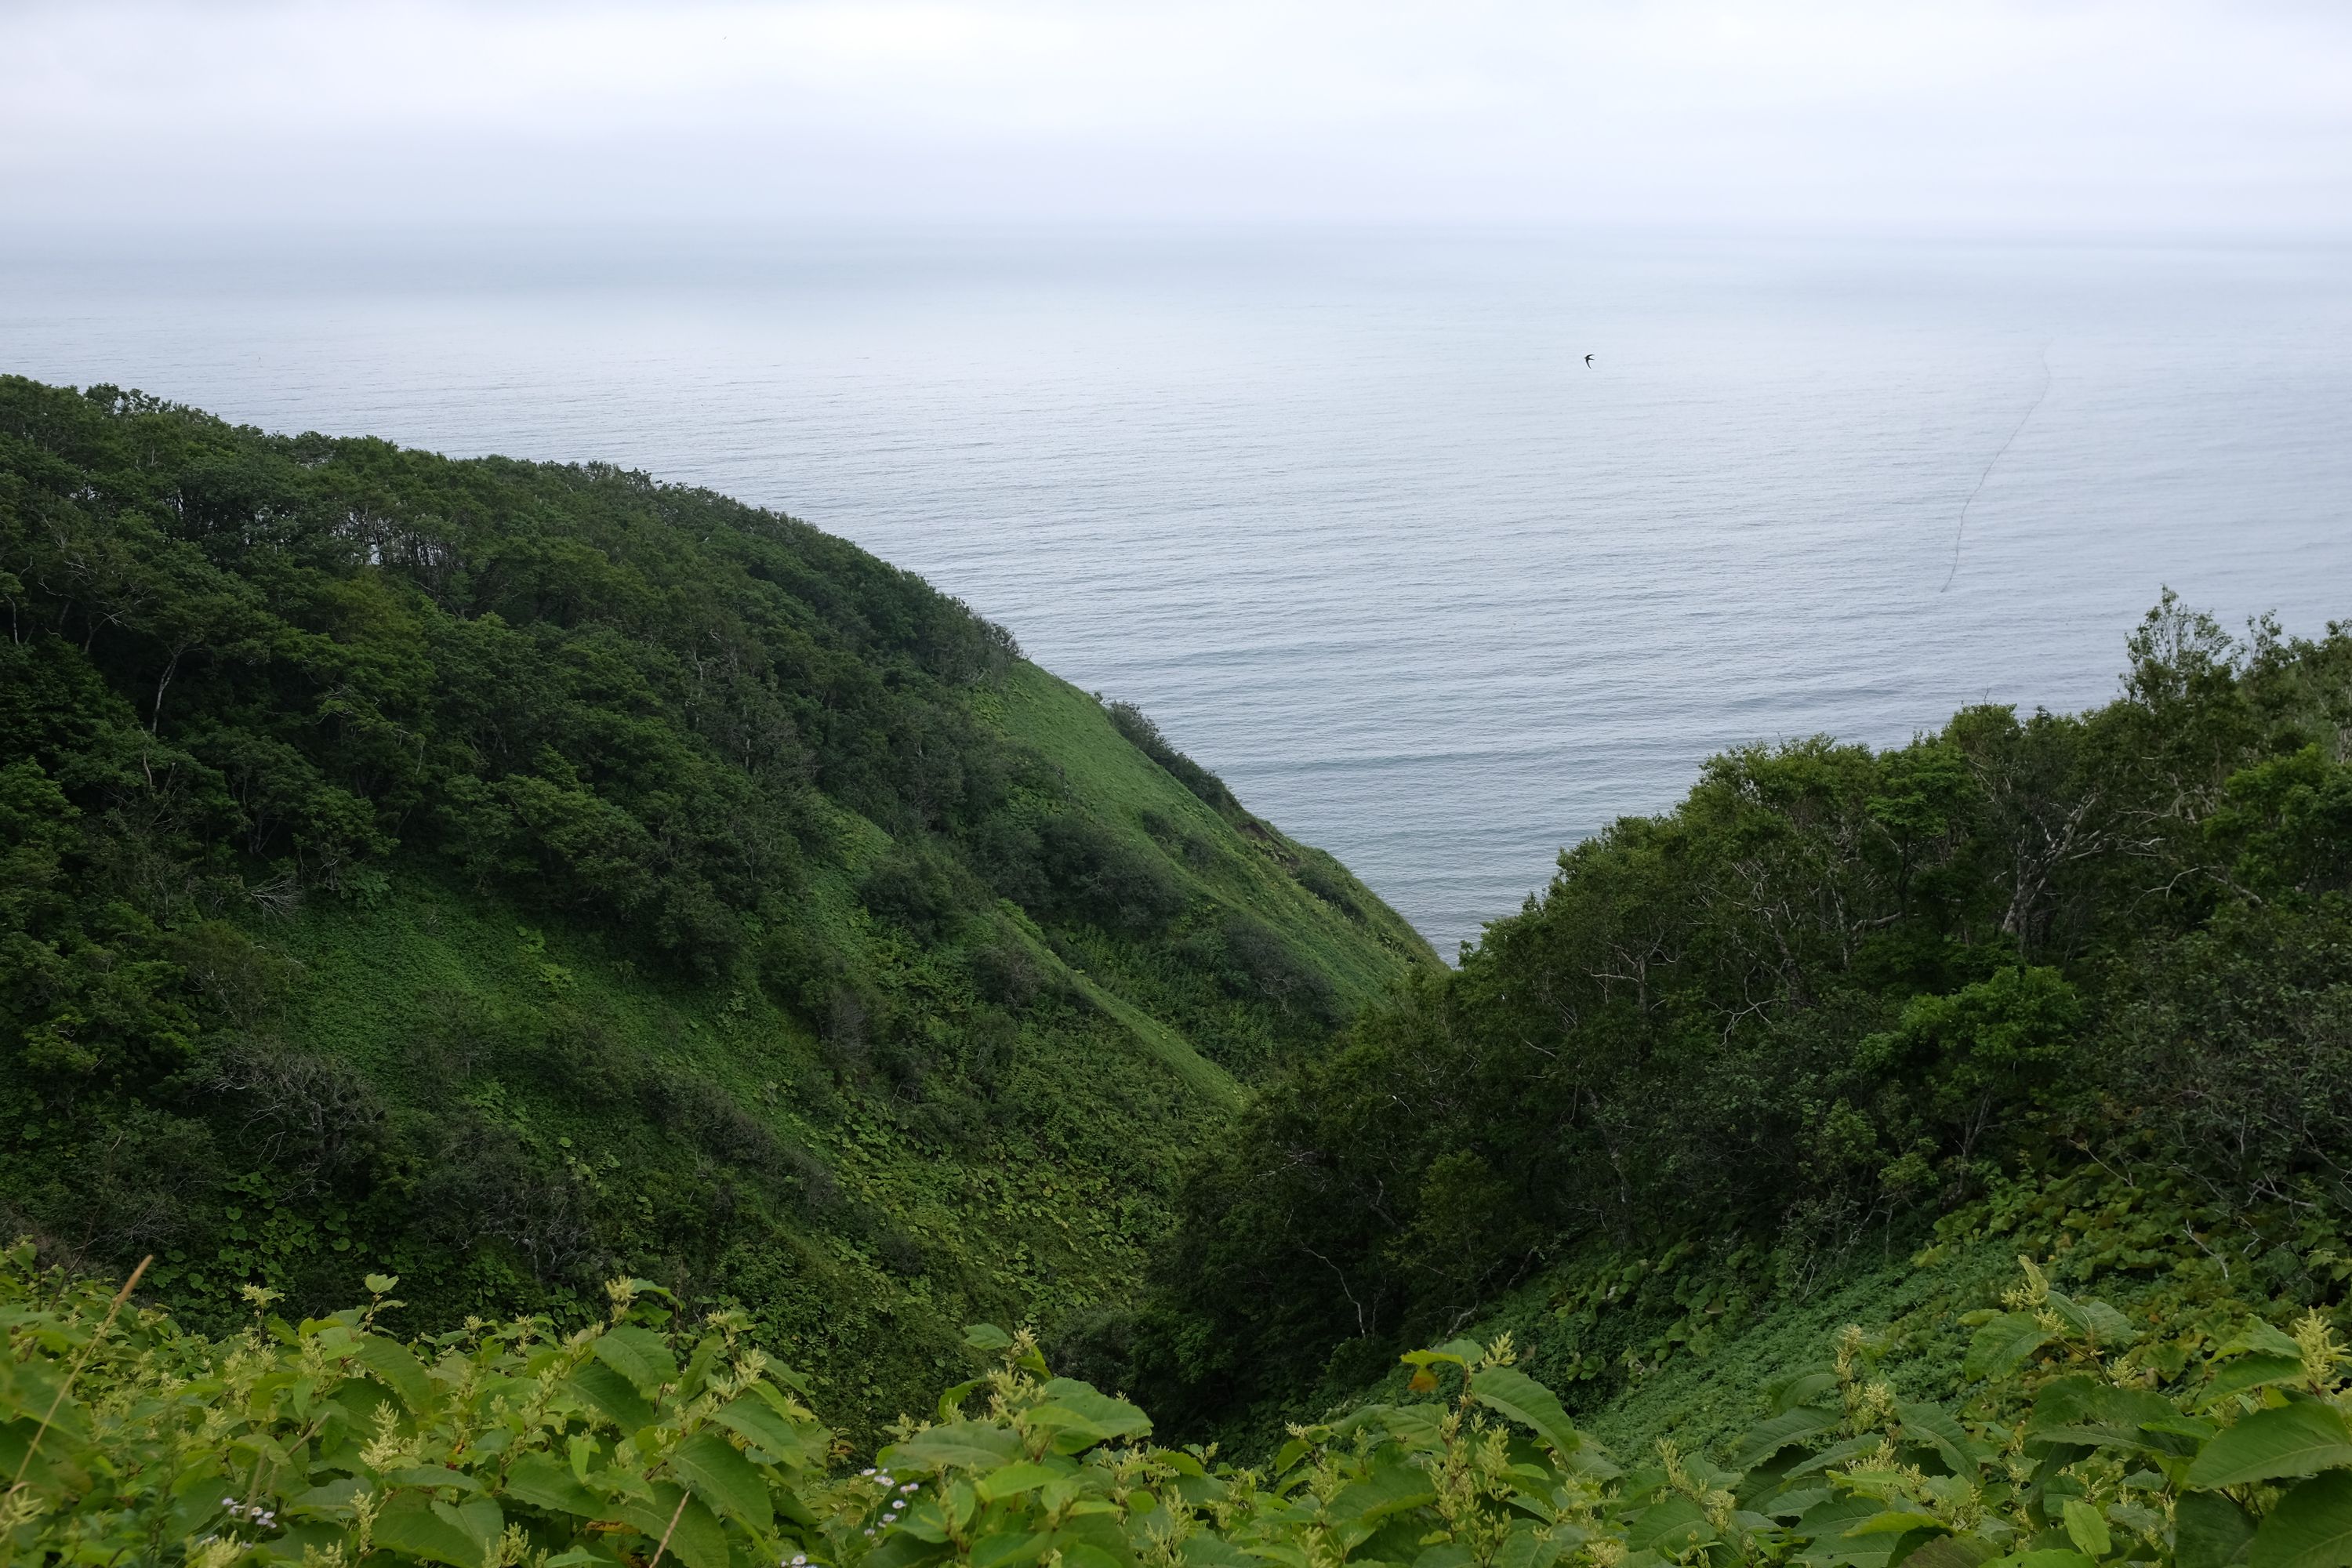 Green hills above a grey ocean.